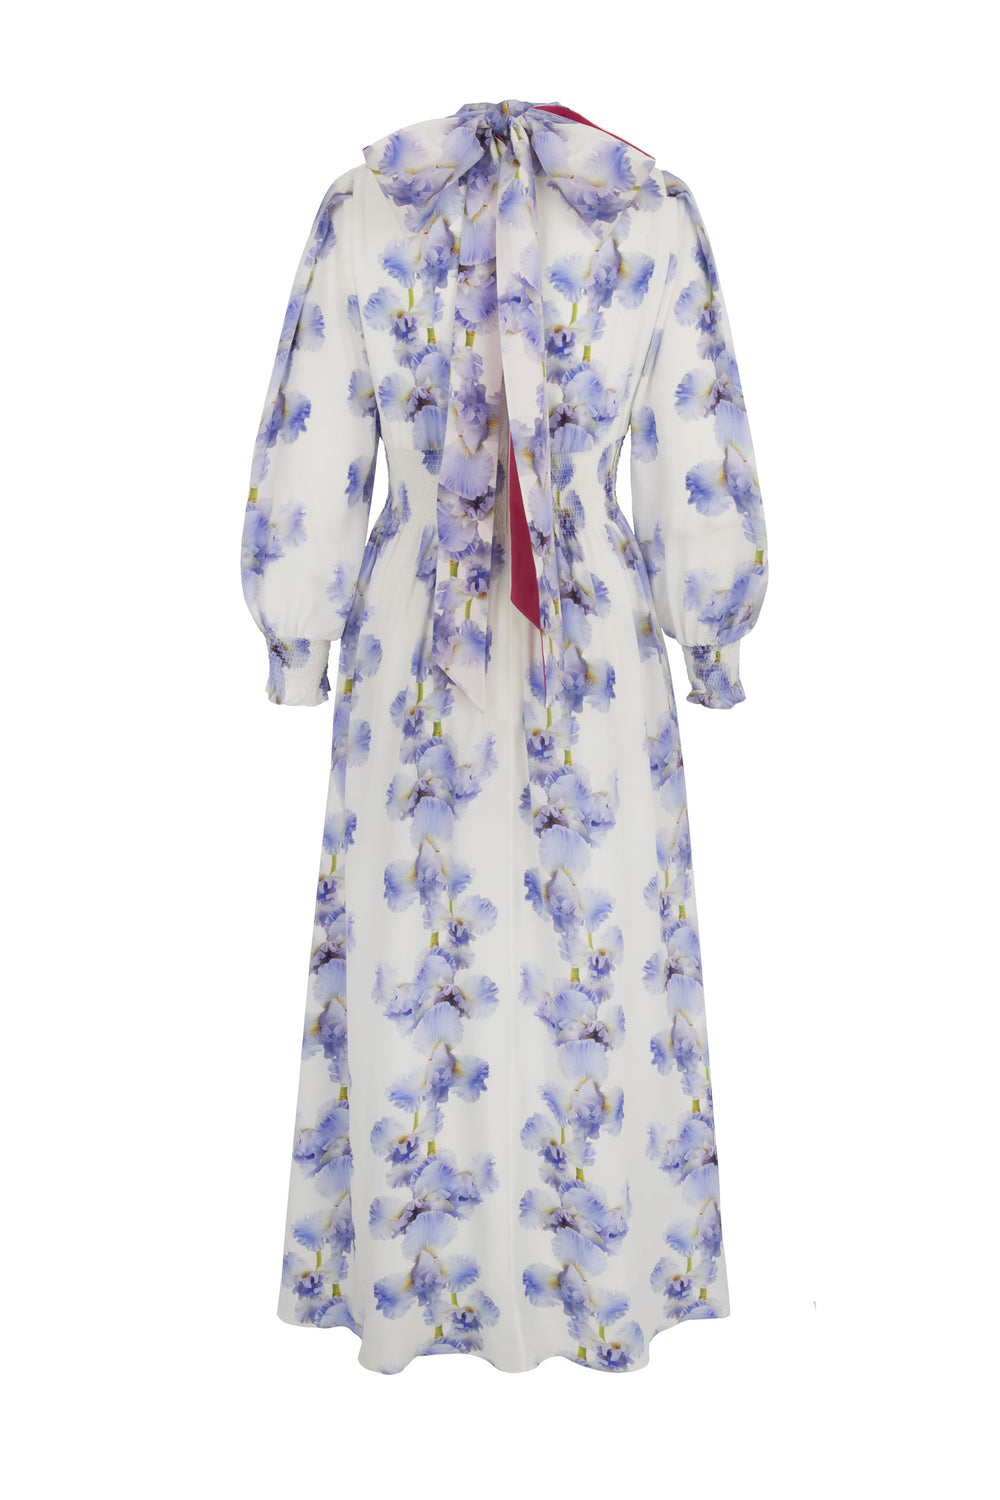 Suzannah London | Kumiko dress | Iris print